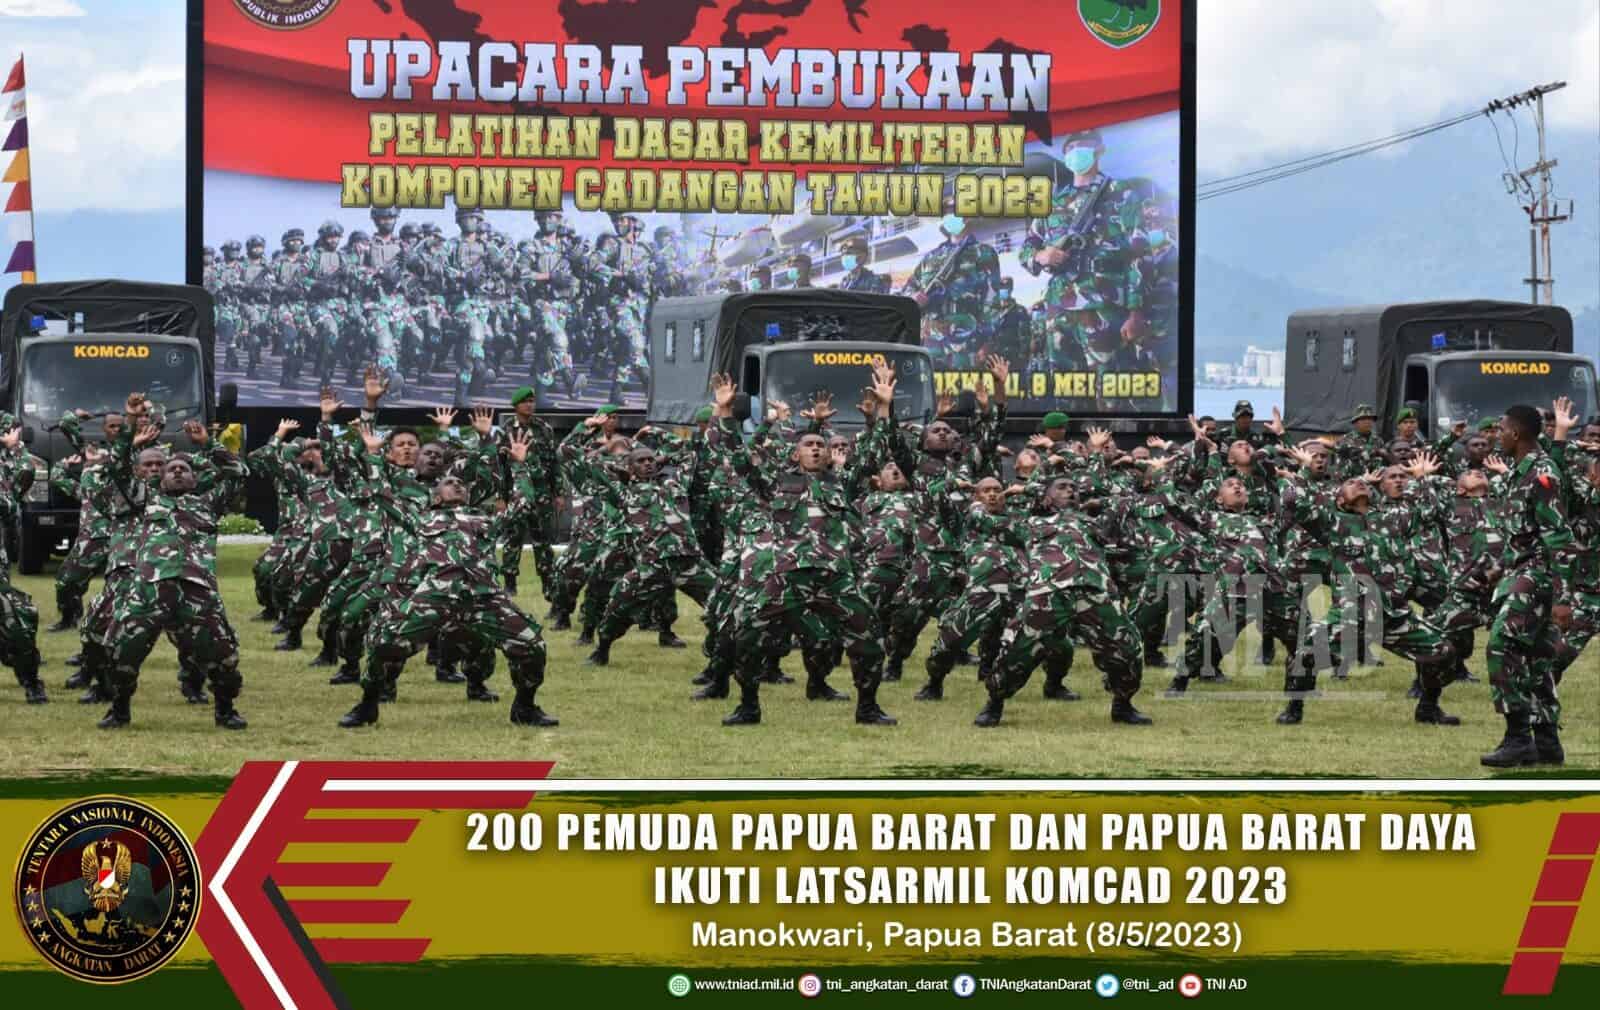 200 Pemuda Terbaik Papua Barat dan Papua Barat Daya Ikuti Latsarmil Komcad Tahun 2023